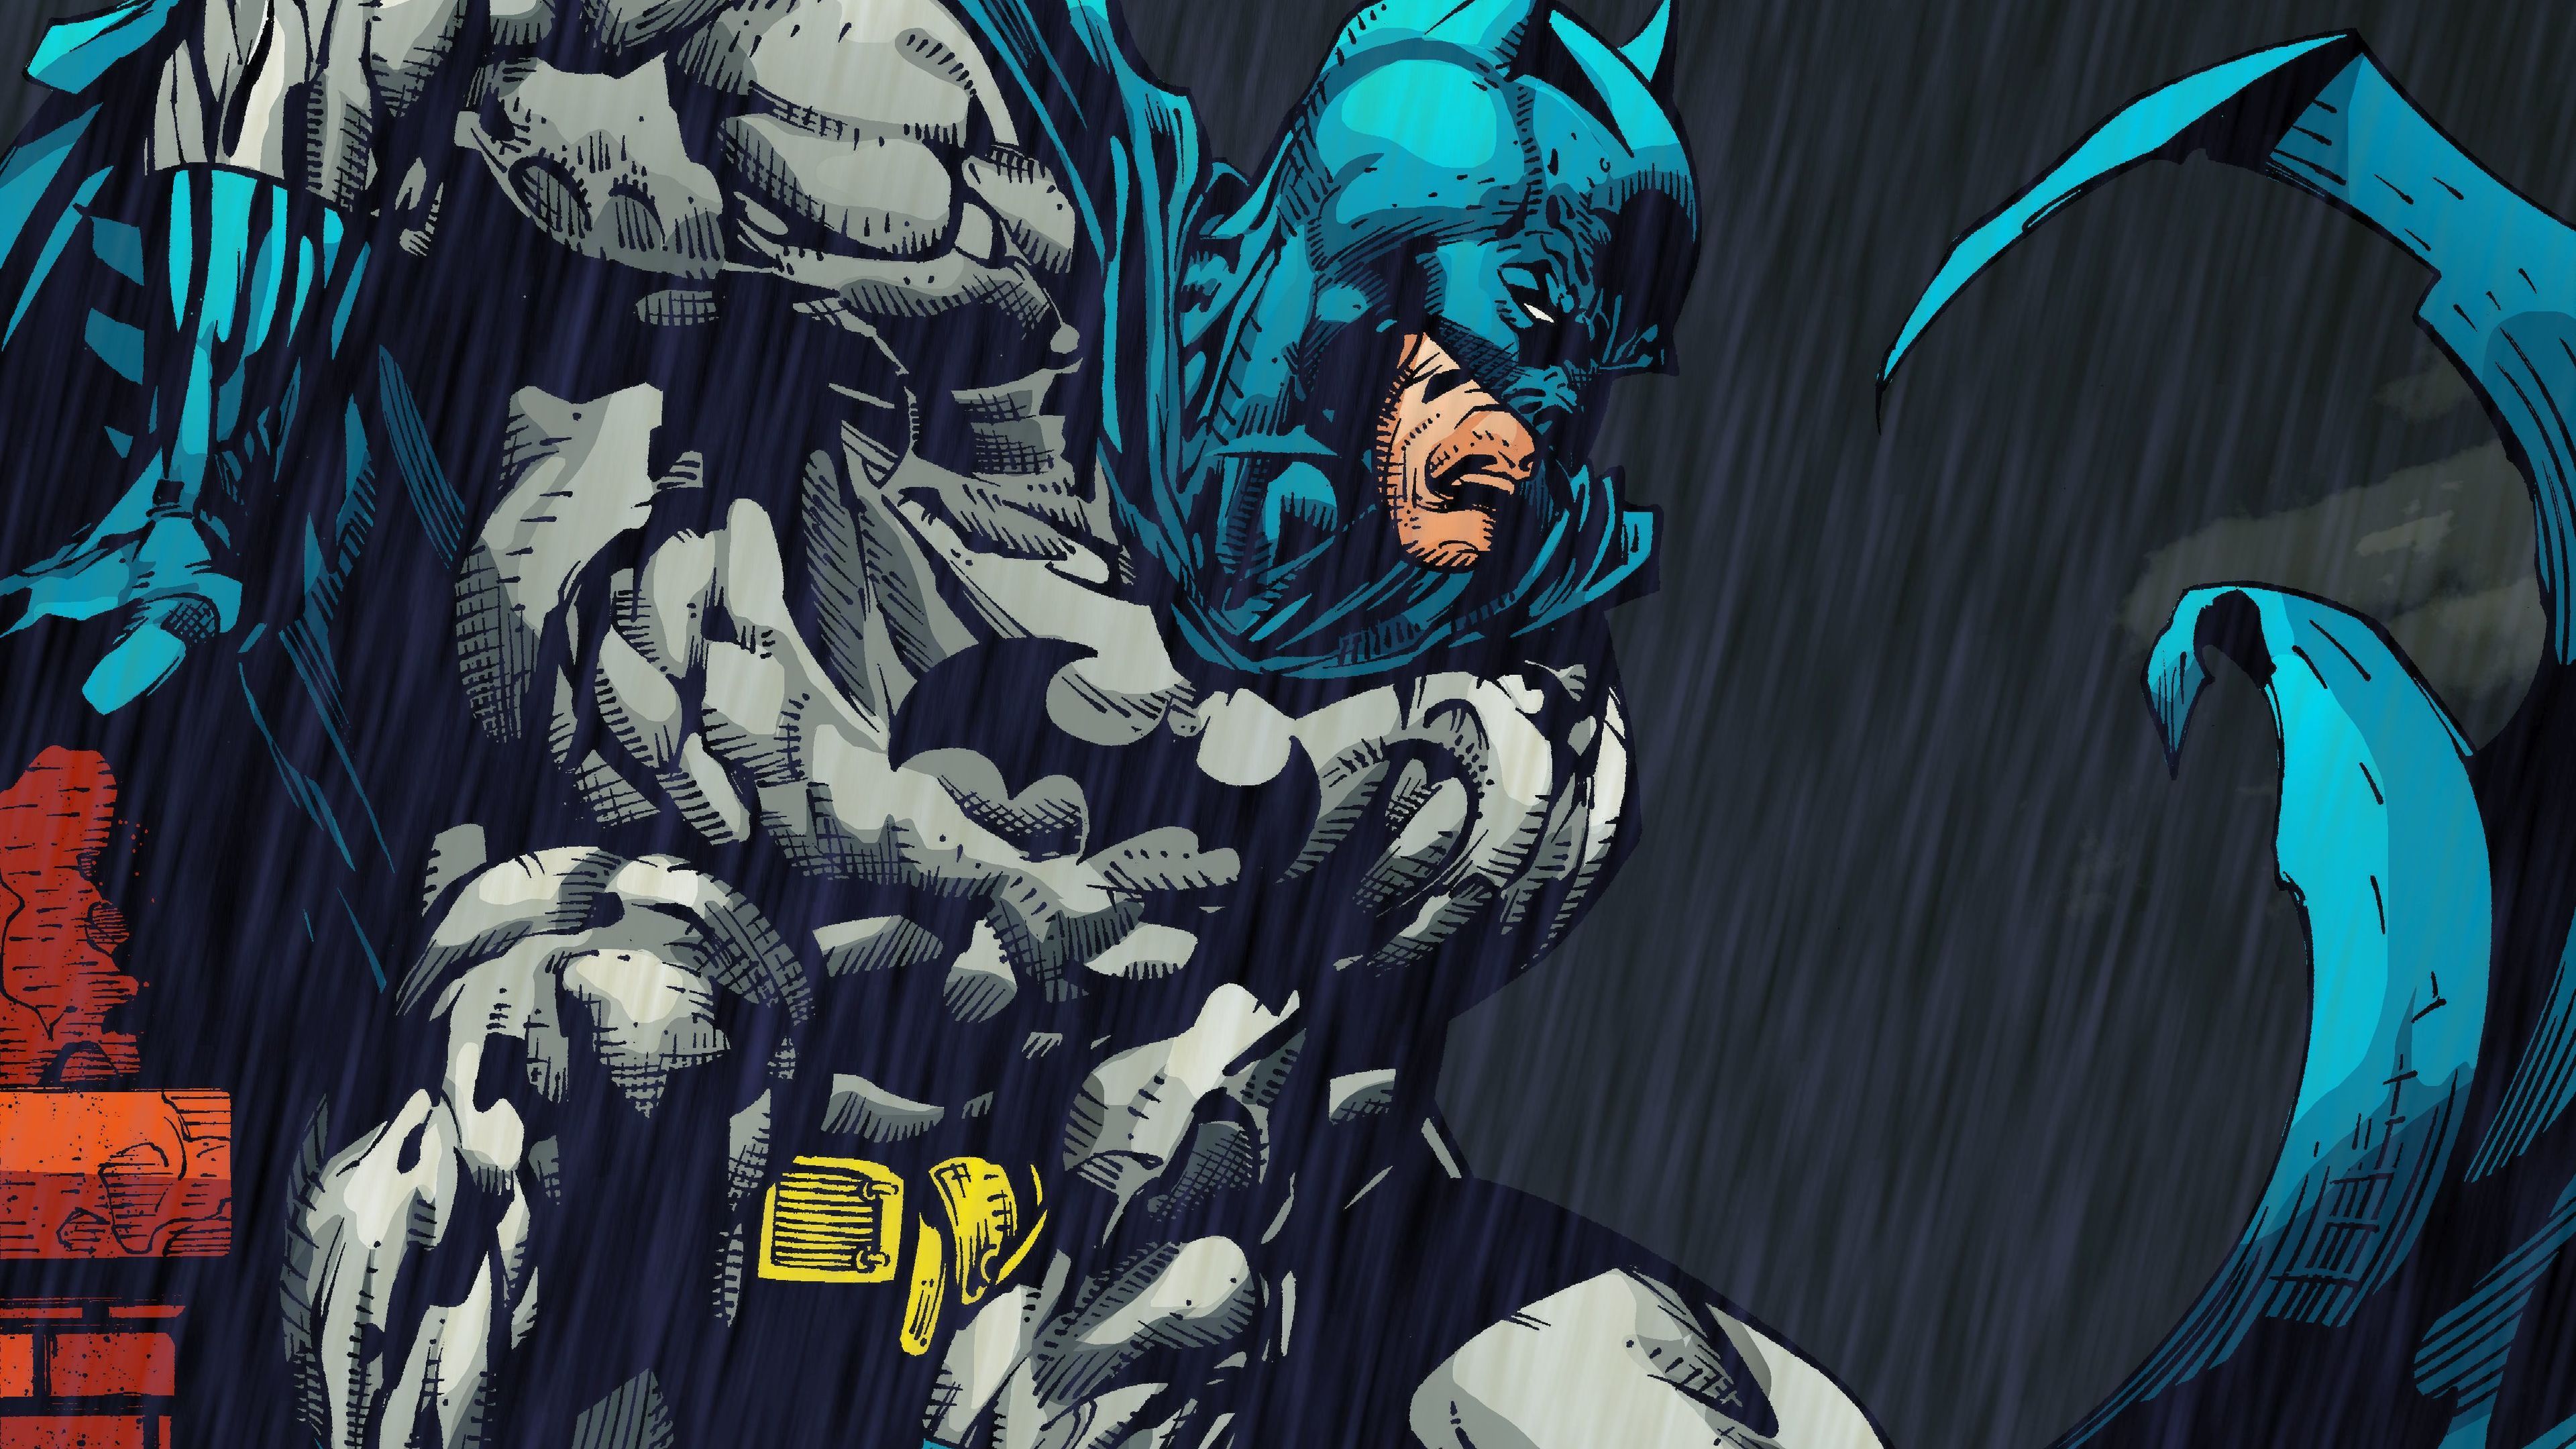 Batman Artwork 4k Superheroes Wallpaper, Hd Wallpaper, Digital Art Wallpaper, Batman Wallpaper, Artw. Batman Comic Wallpaper, Batman Wallpaper, Batman Artwork